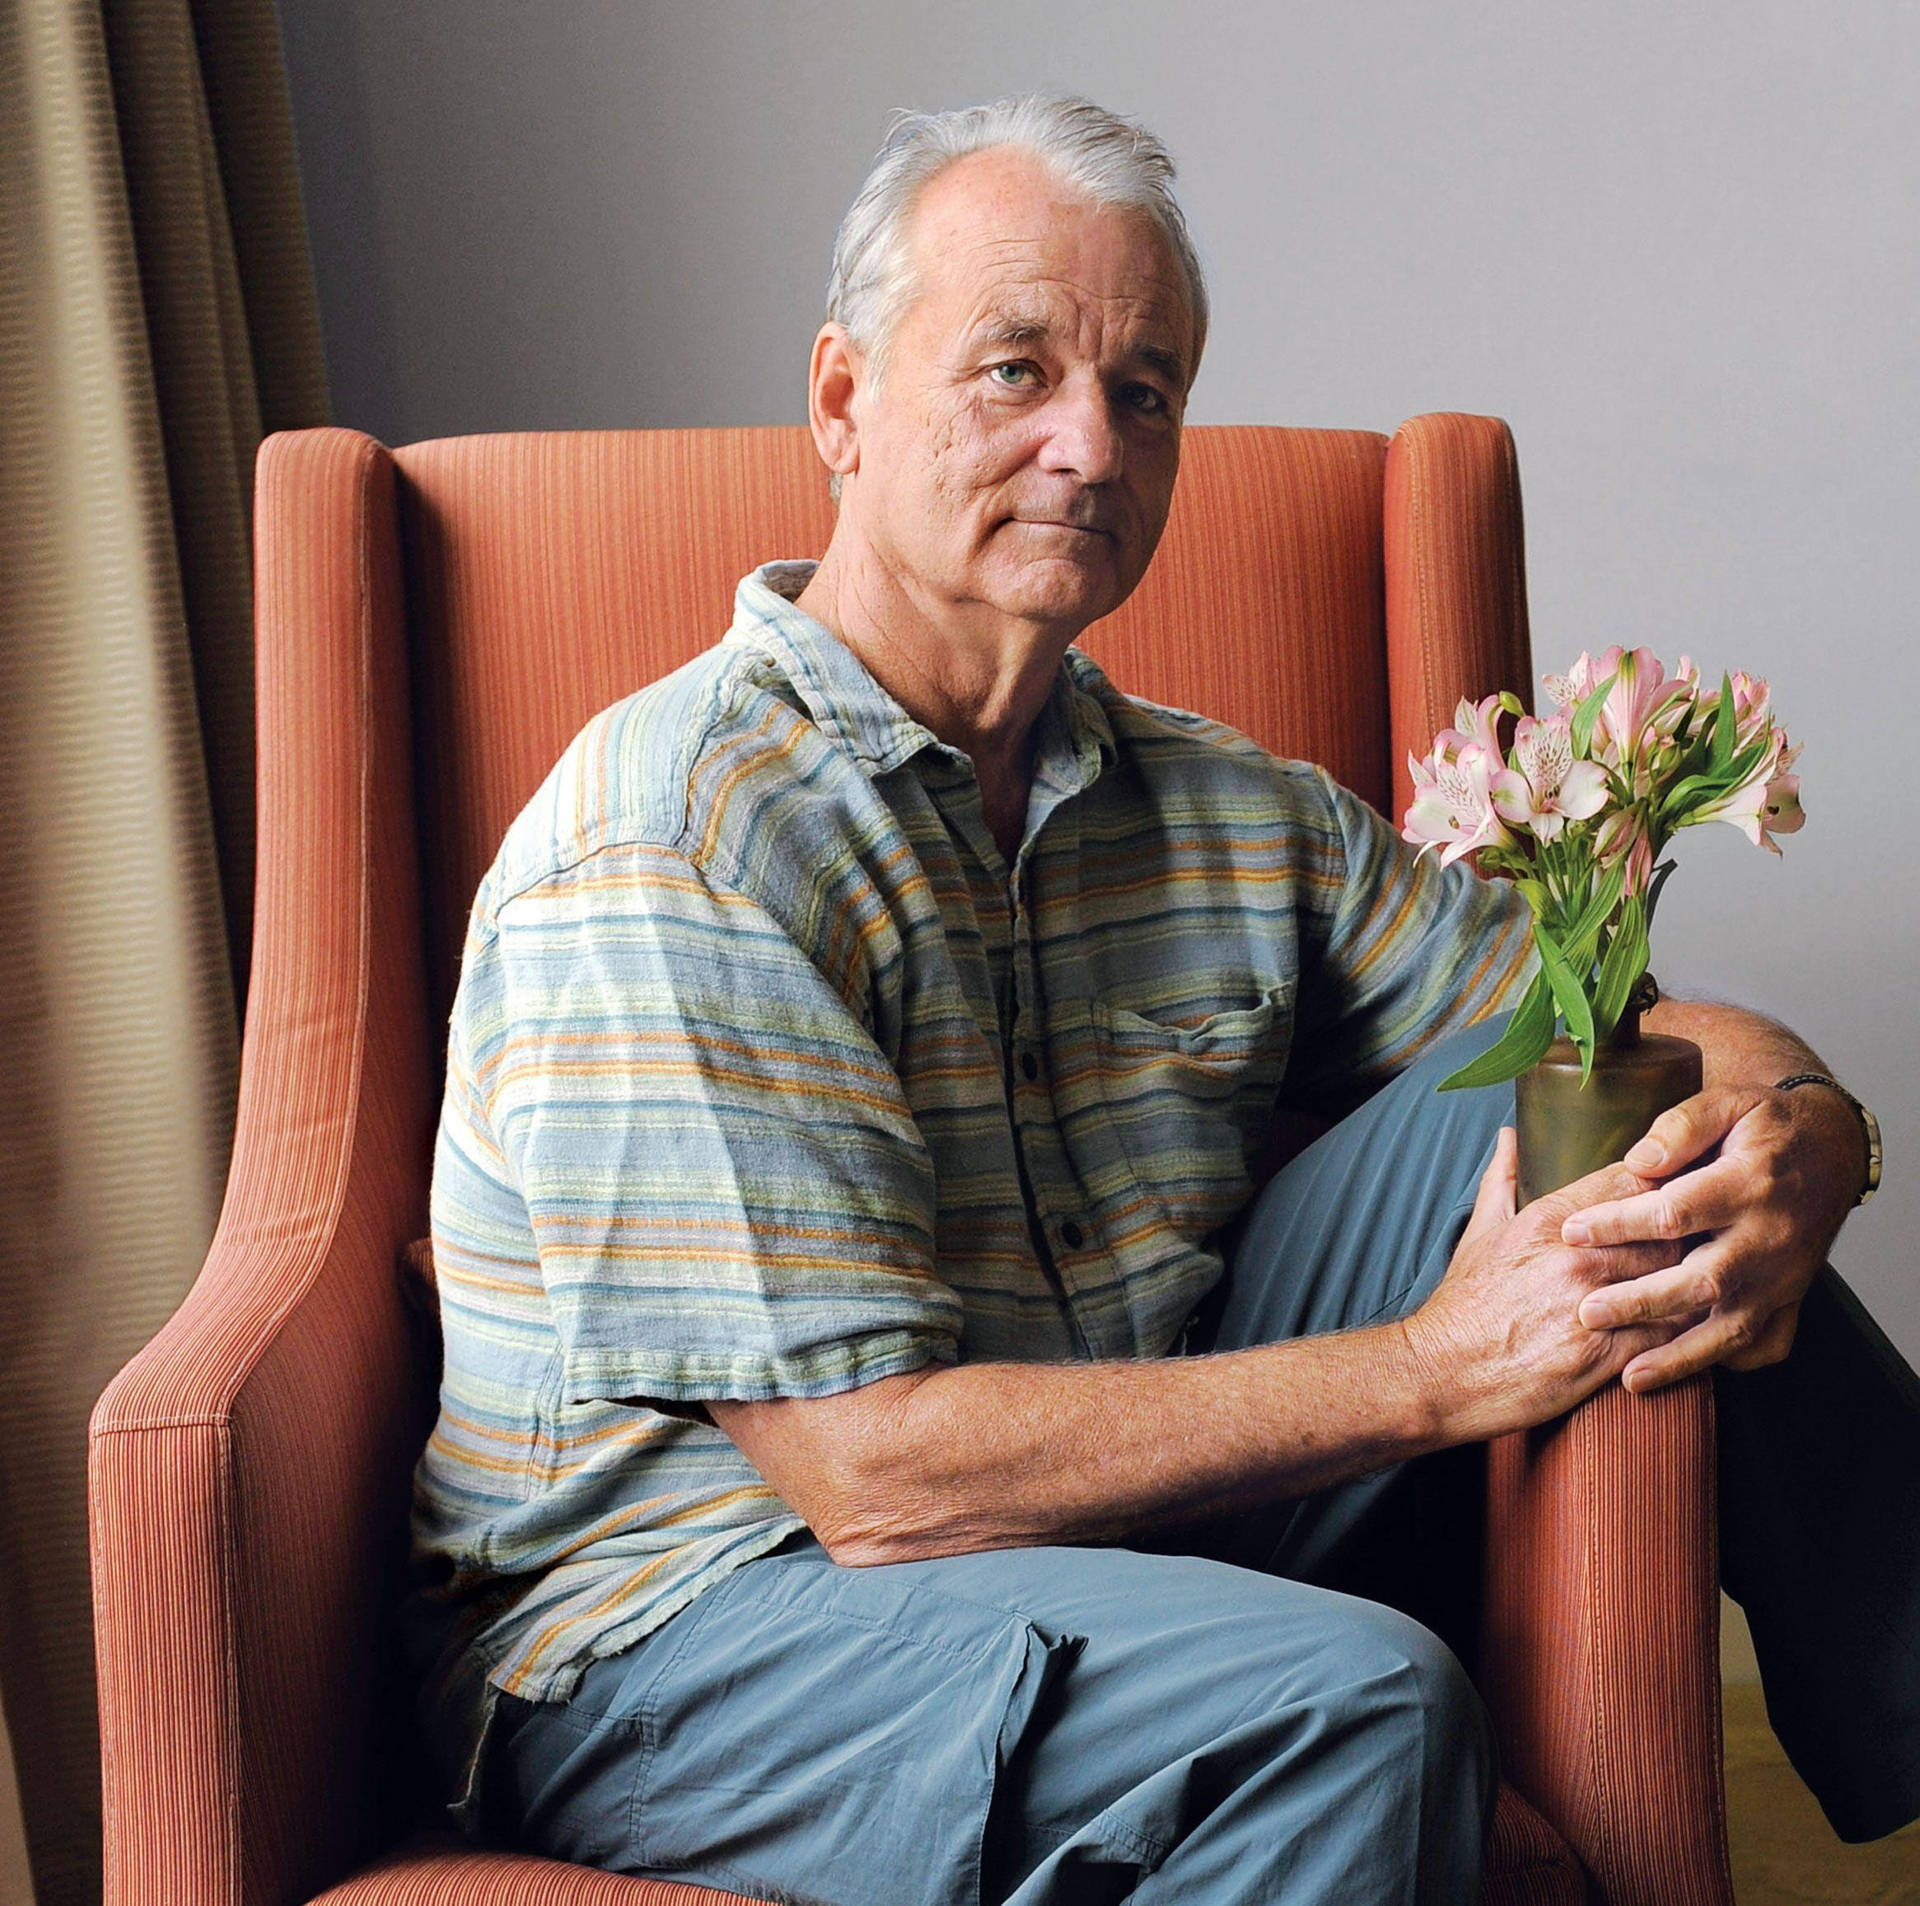 Bill Murray Sitting Chair Flowers Hotel